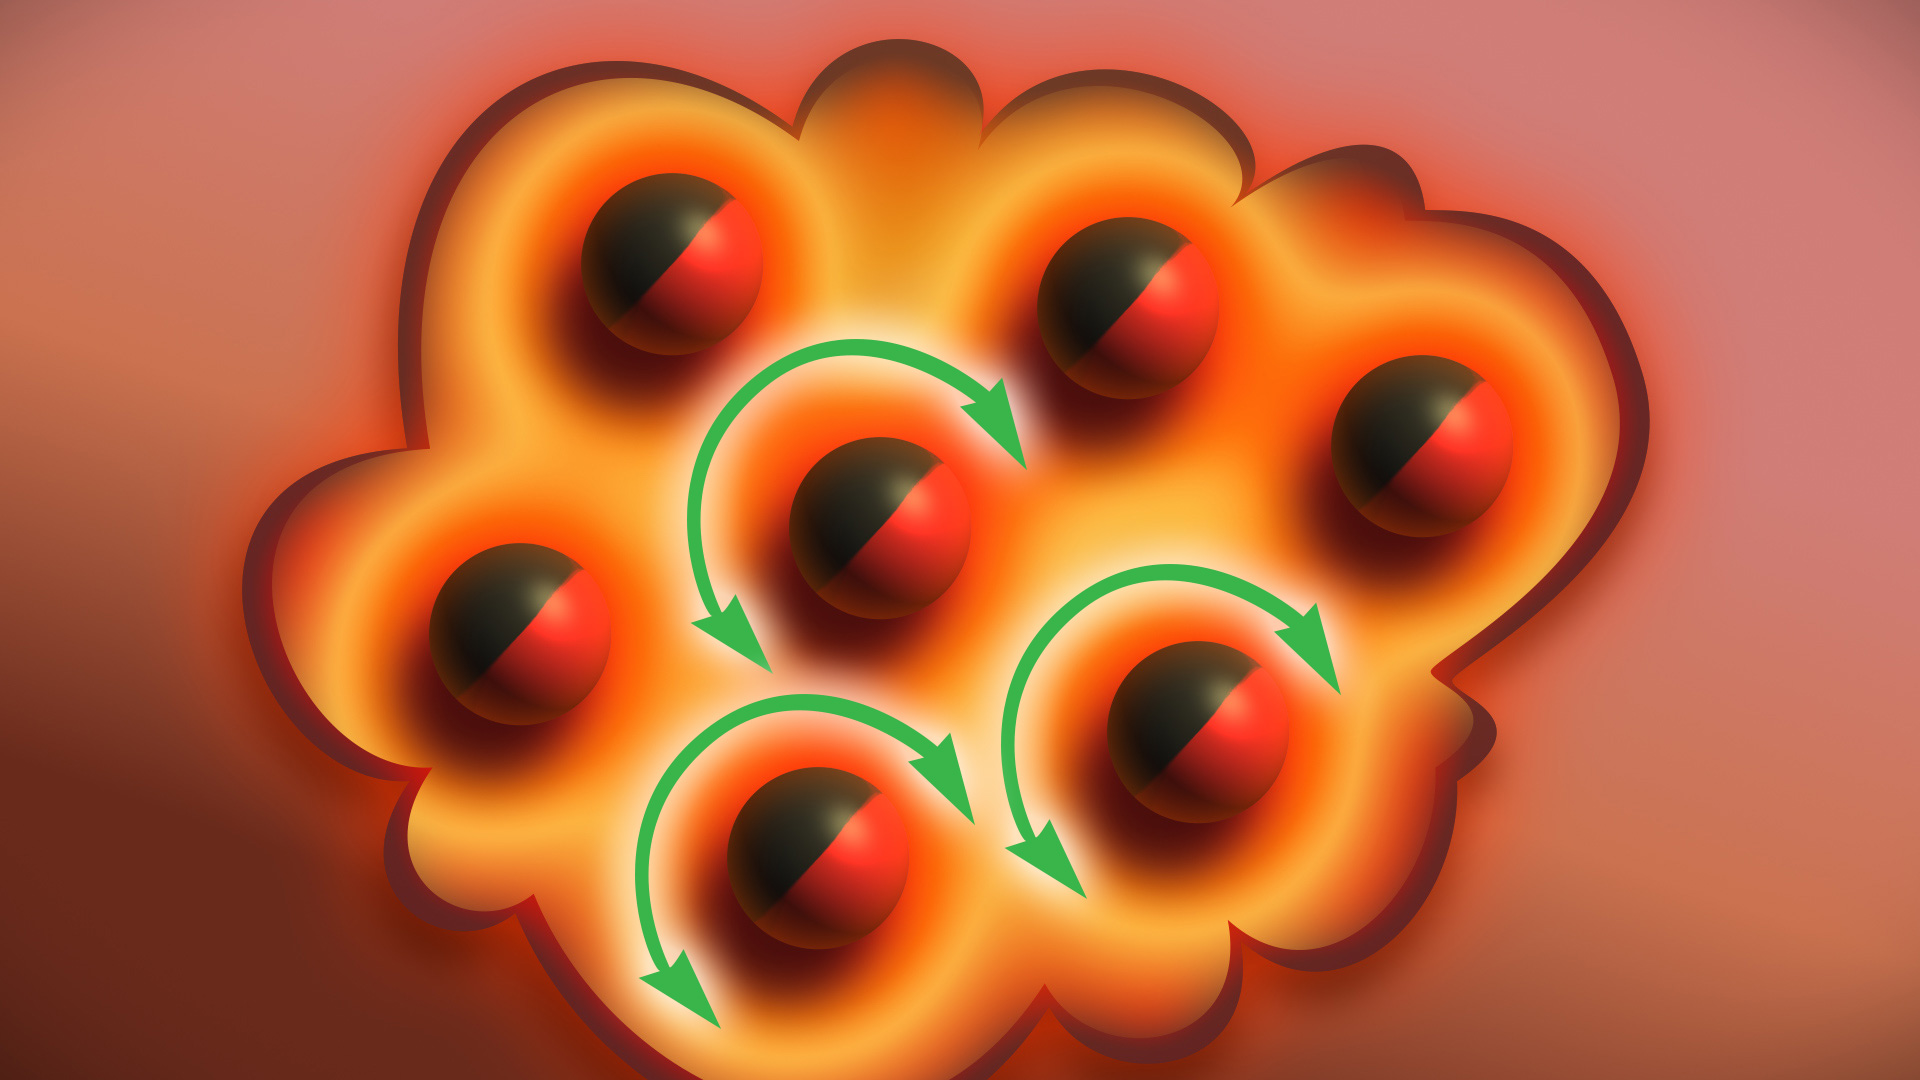 Heated iron nanoparticles